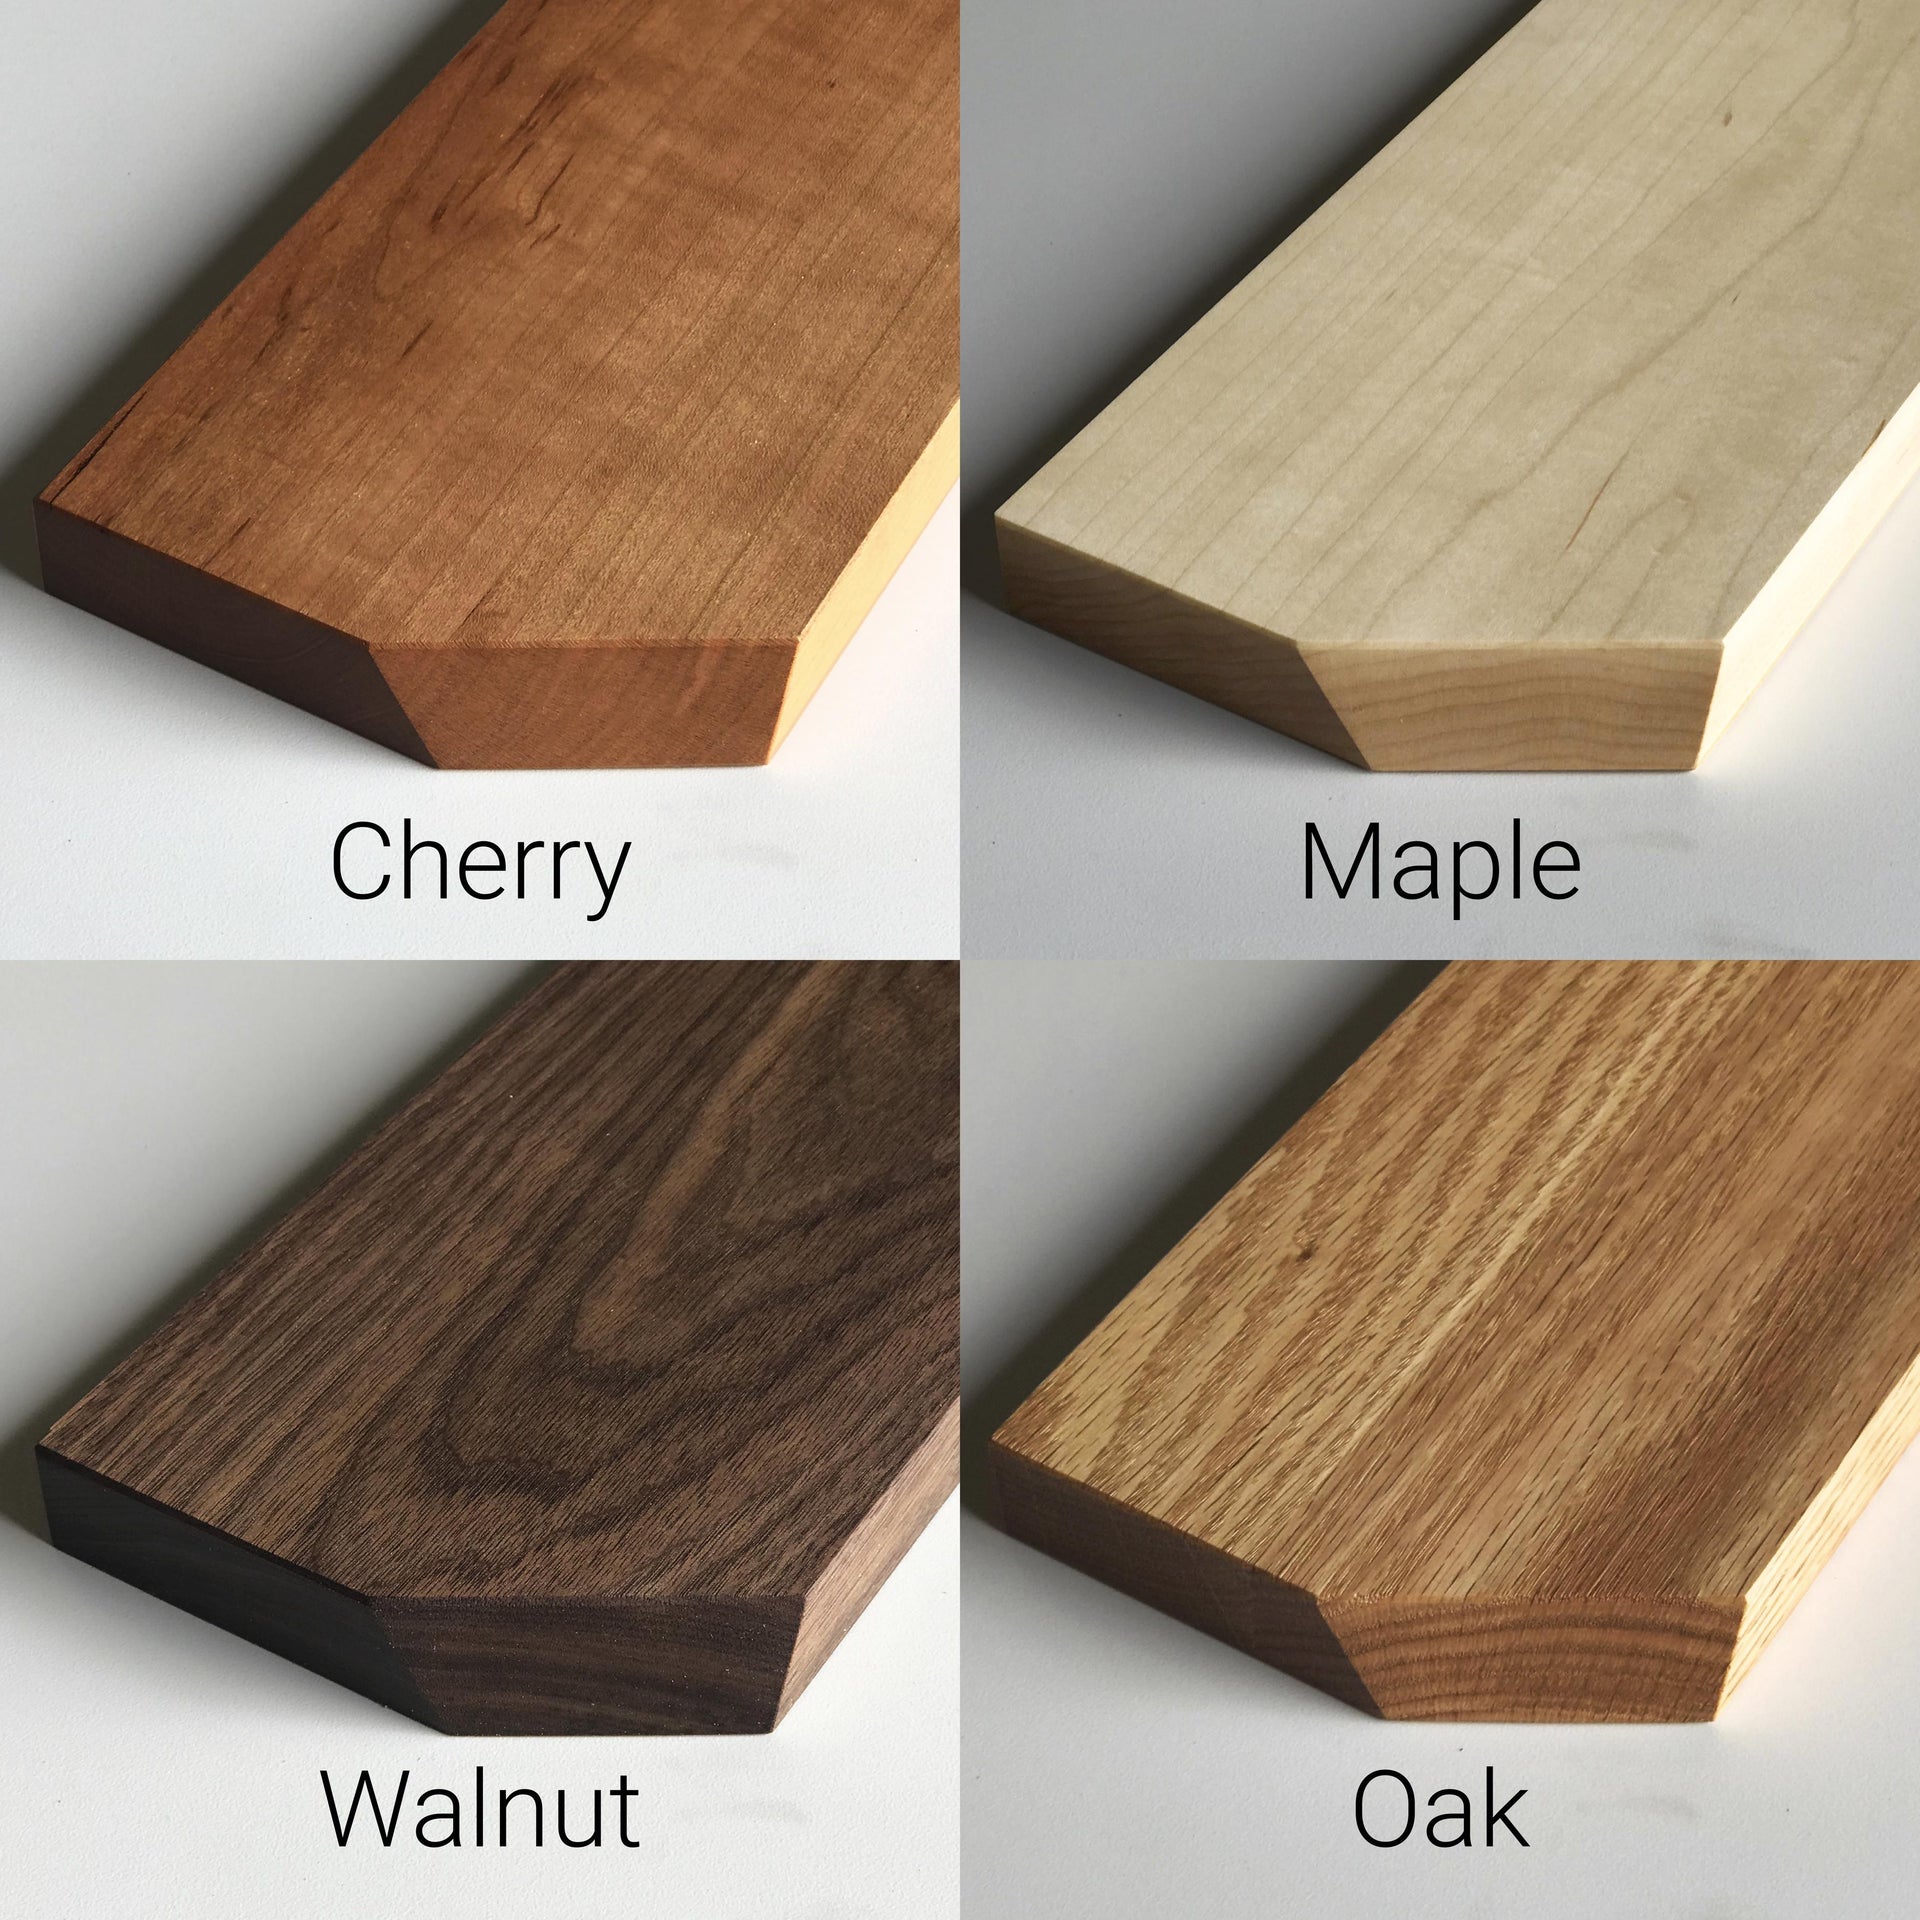 Solid wood samples